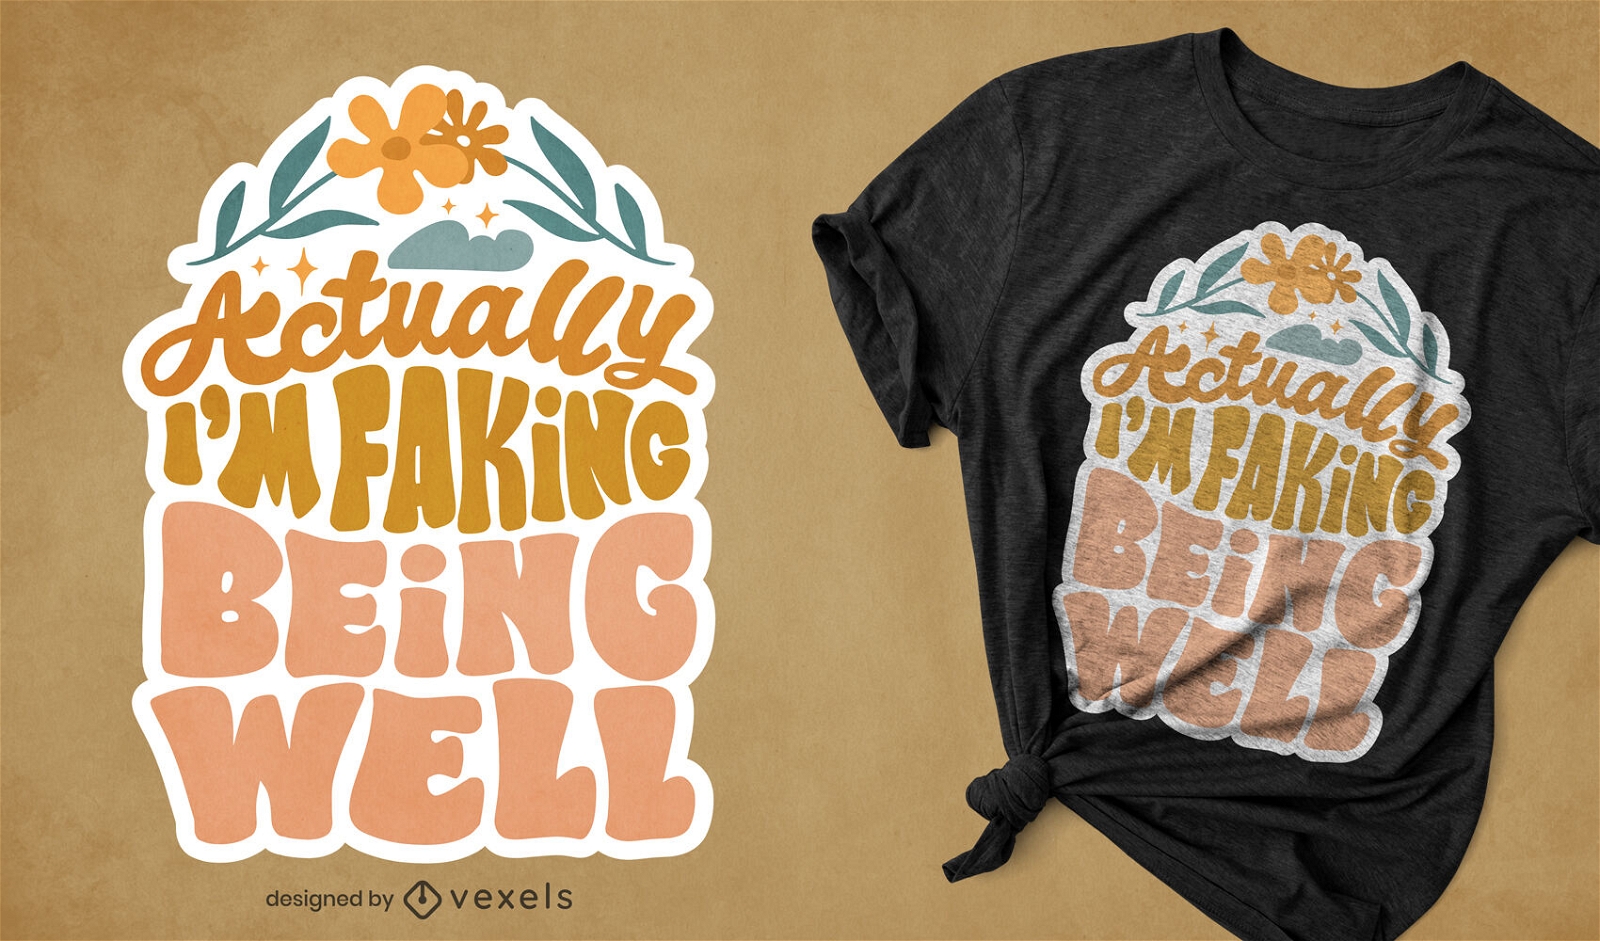 Faking Being Well T-shirt Design